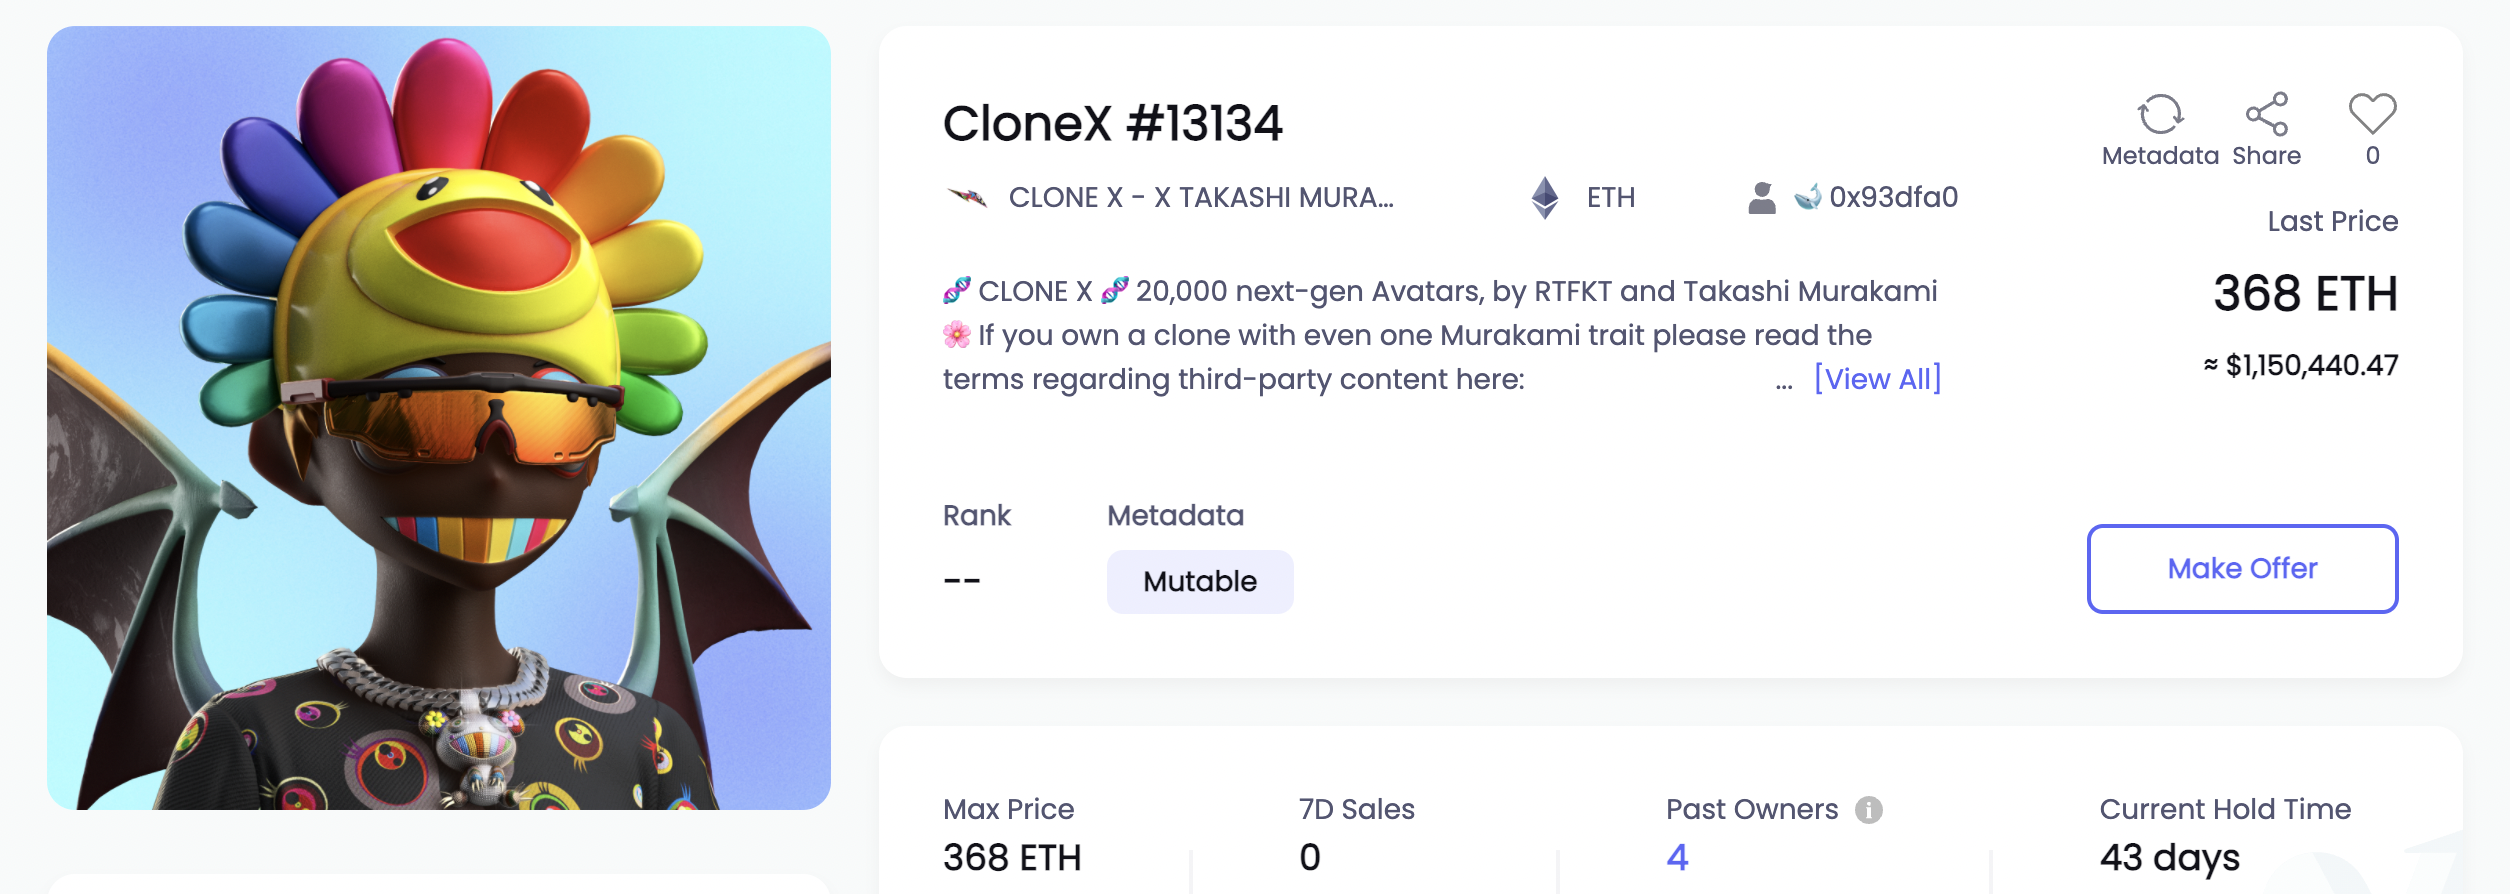 CloneX #13134 - 368ETH   from nftgo.io